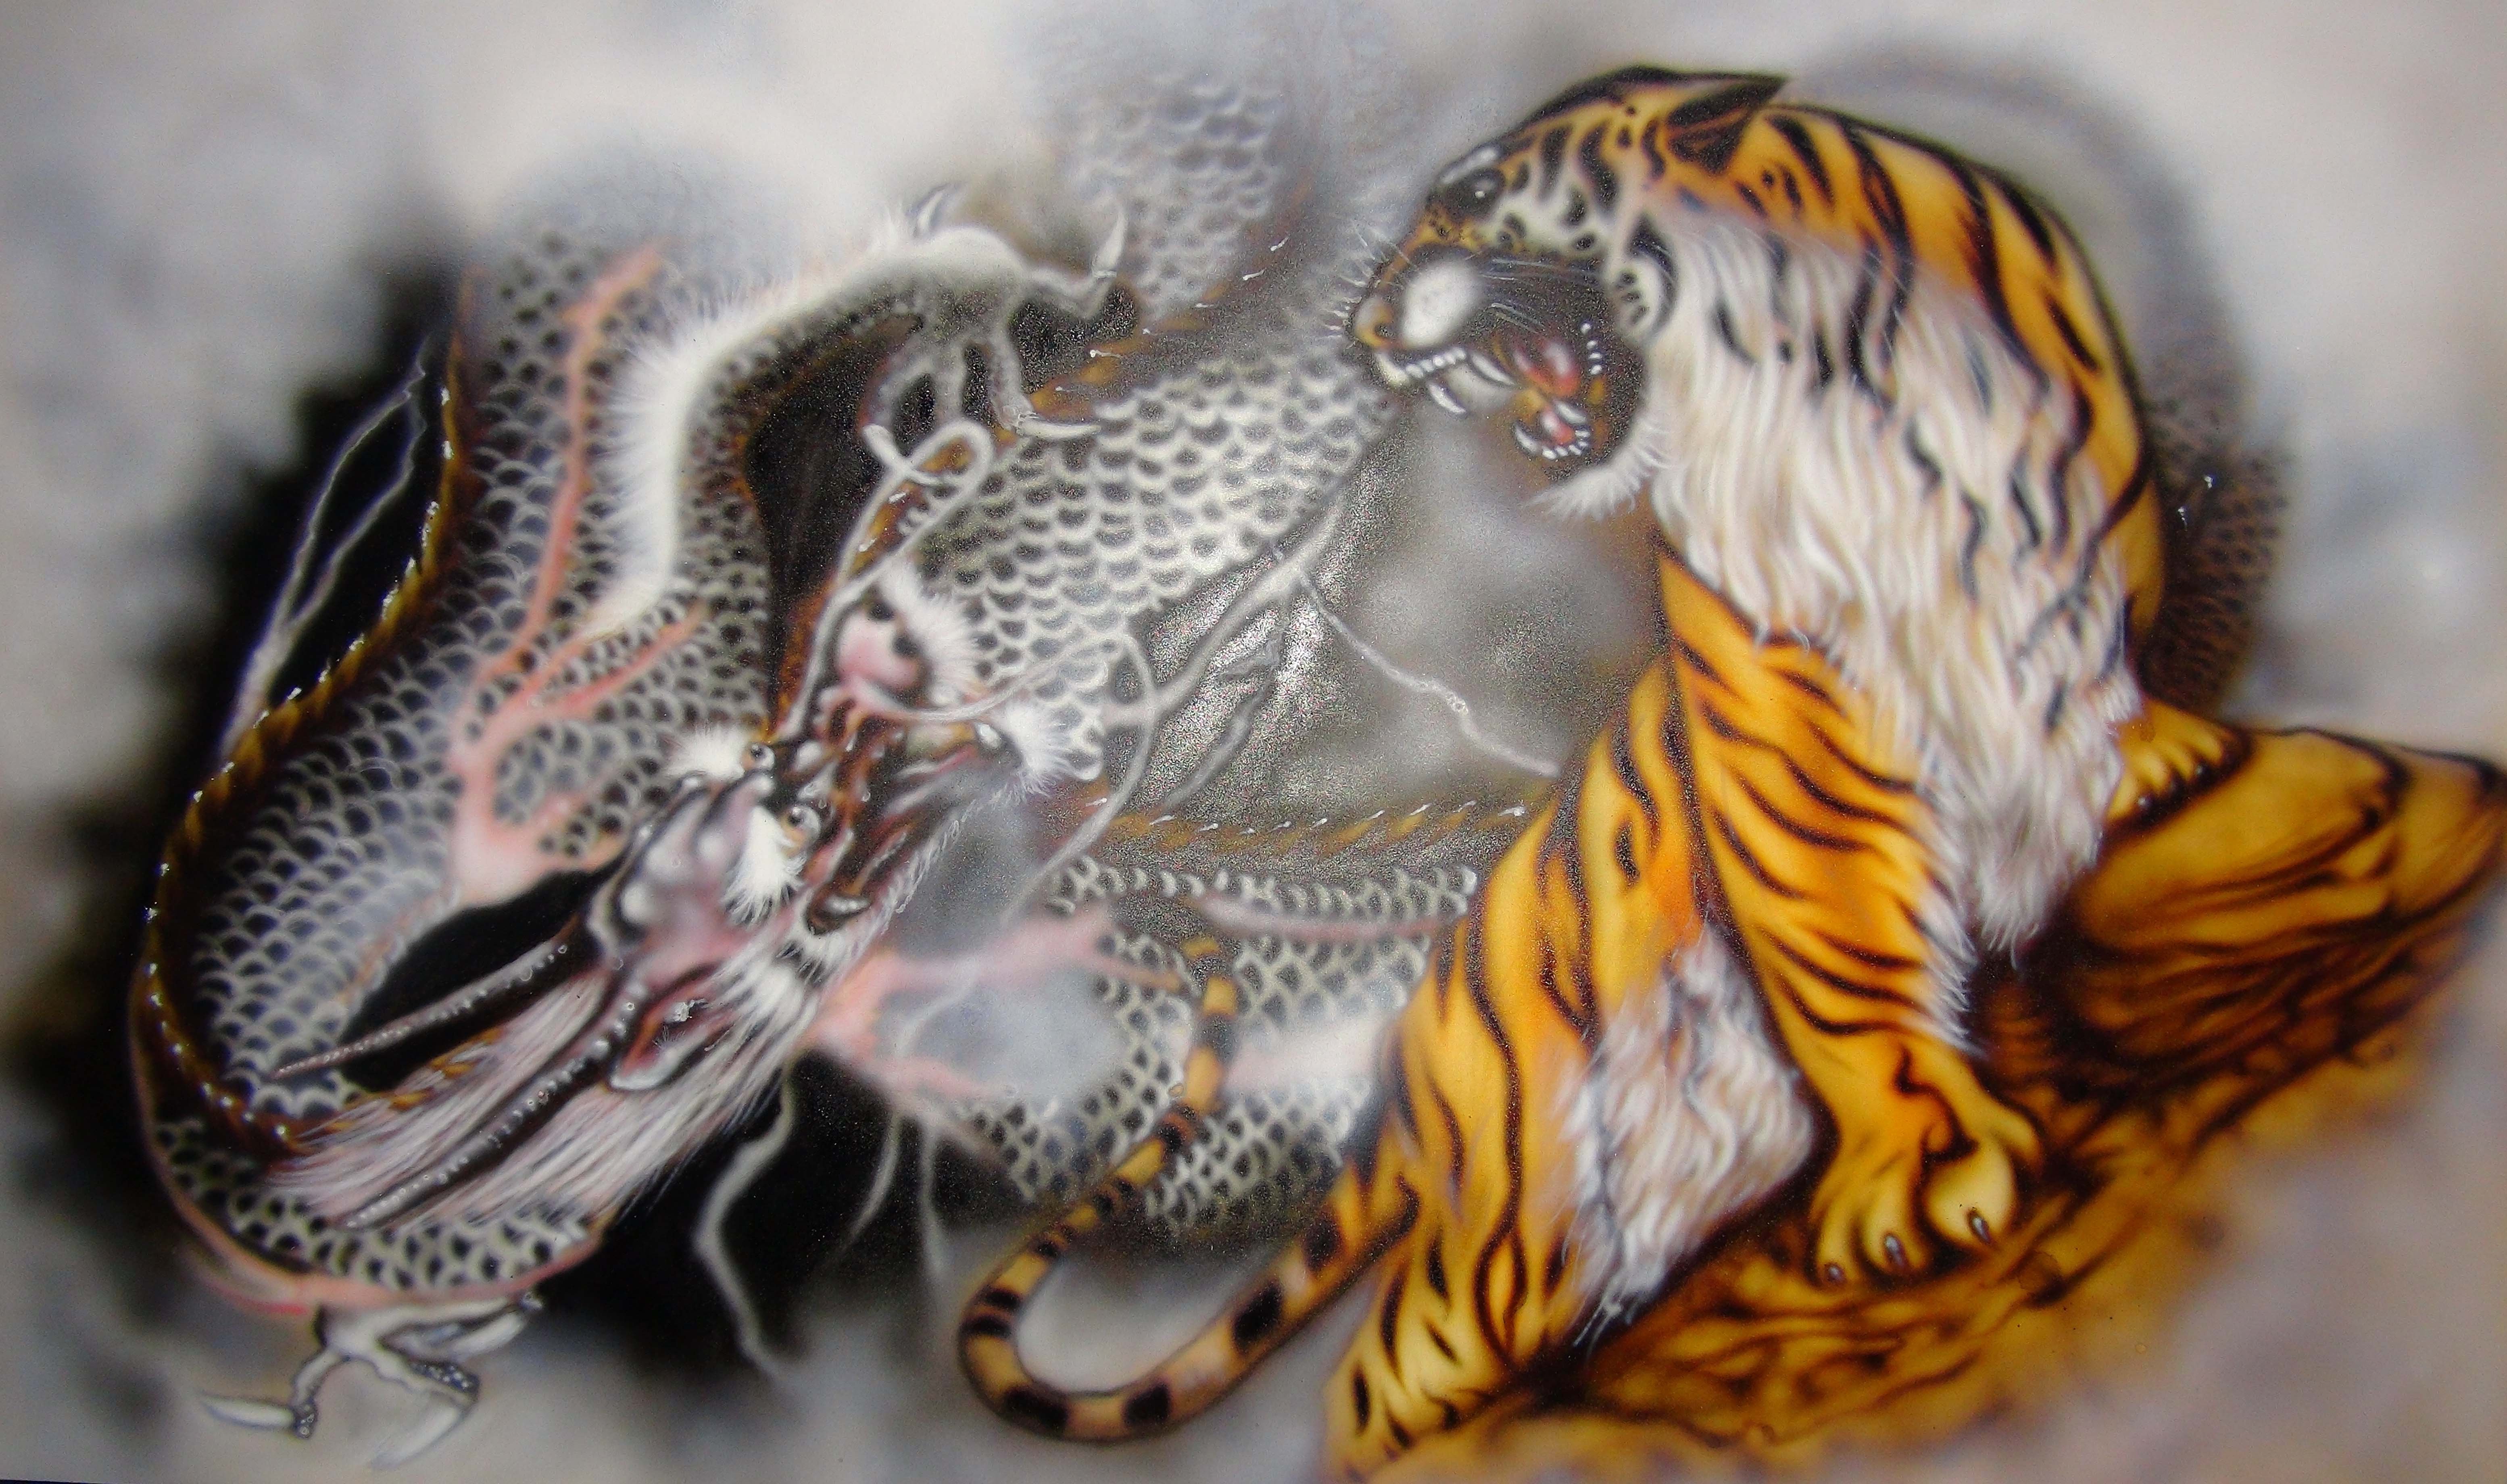 Тигр и дракон в китайской мифологии - 66 фото